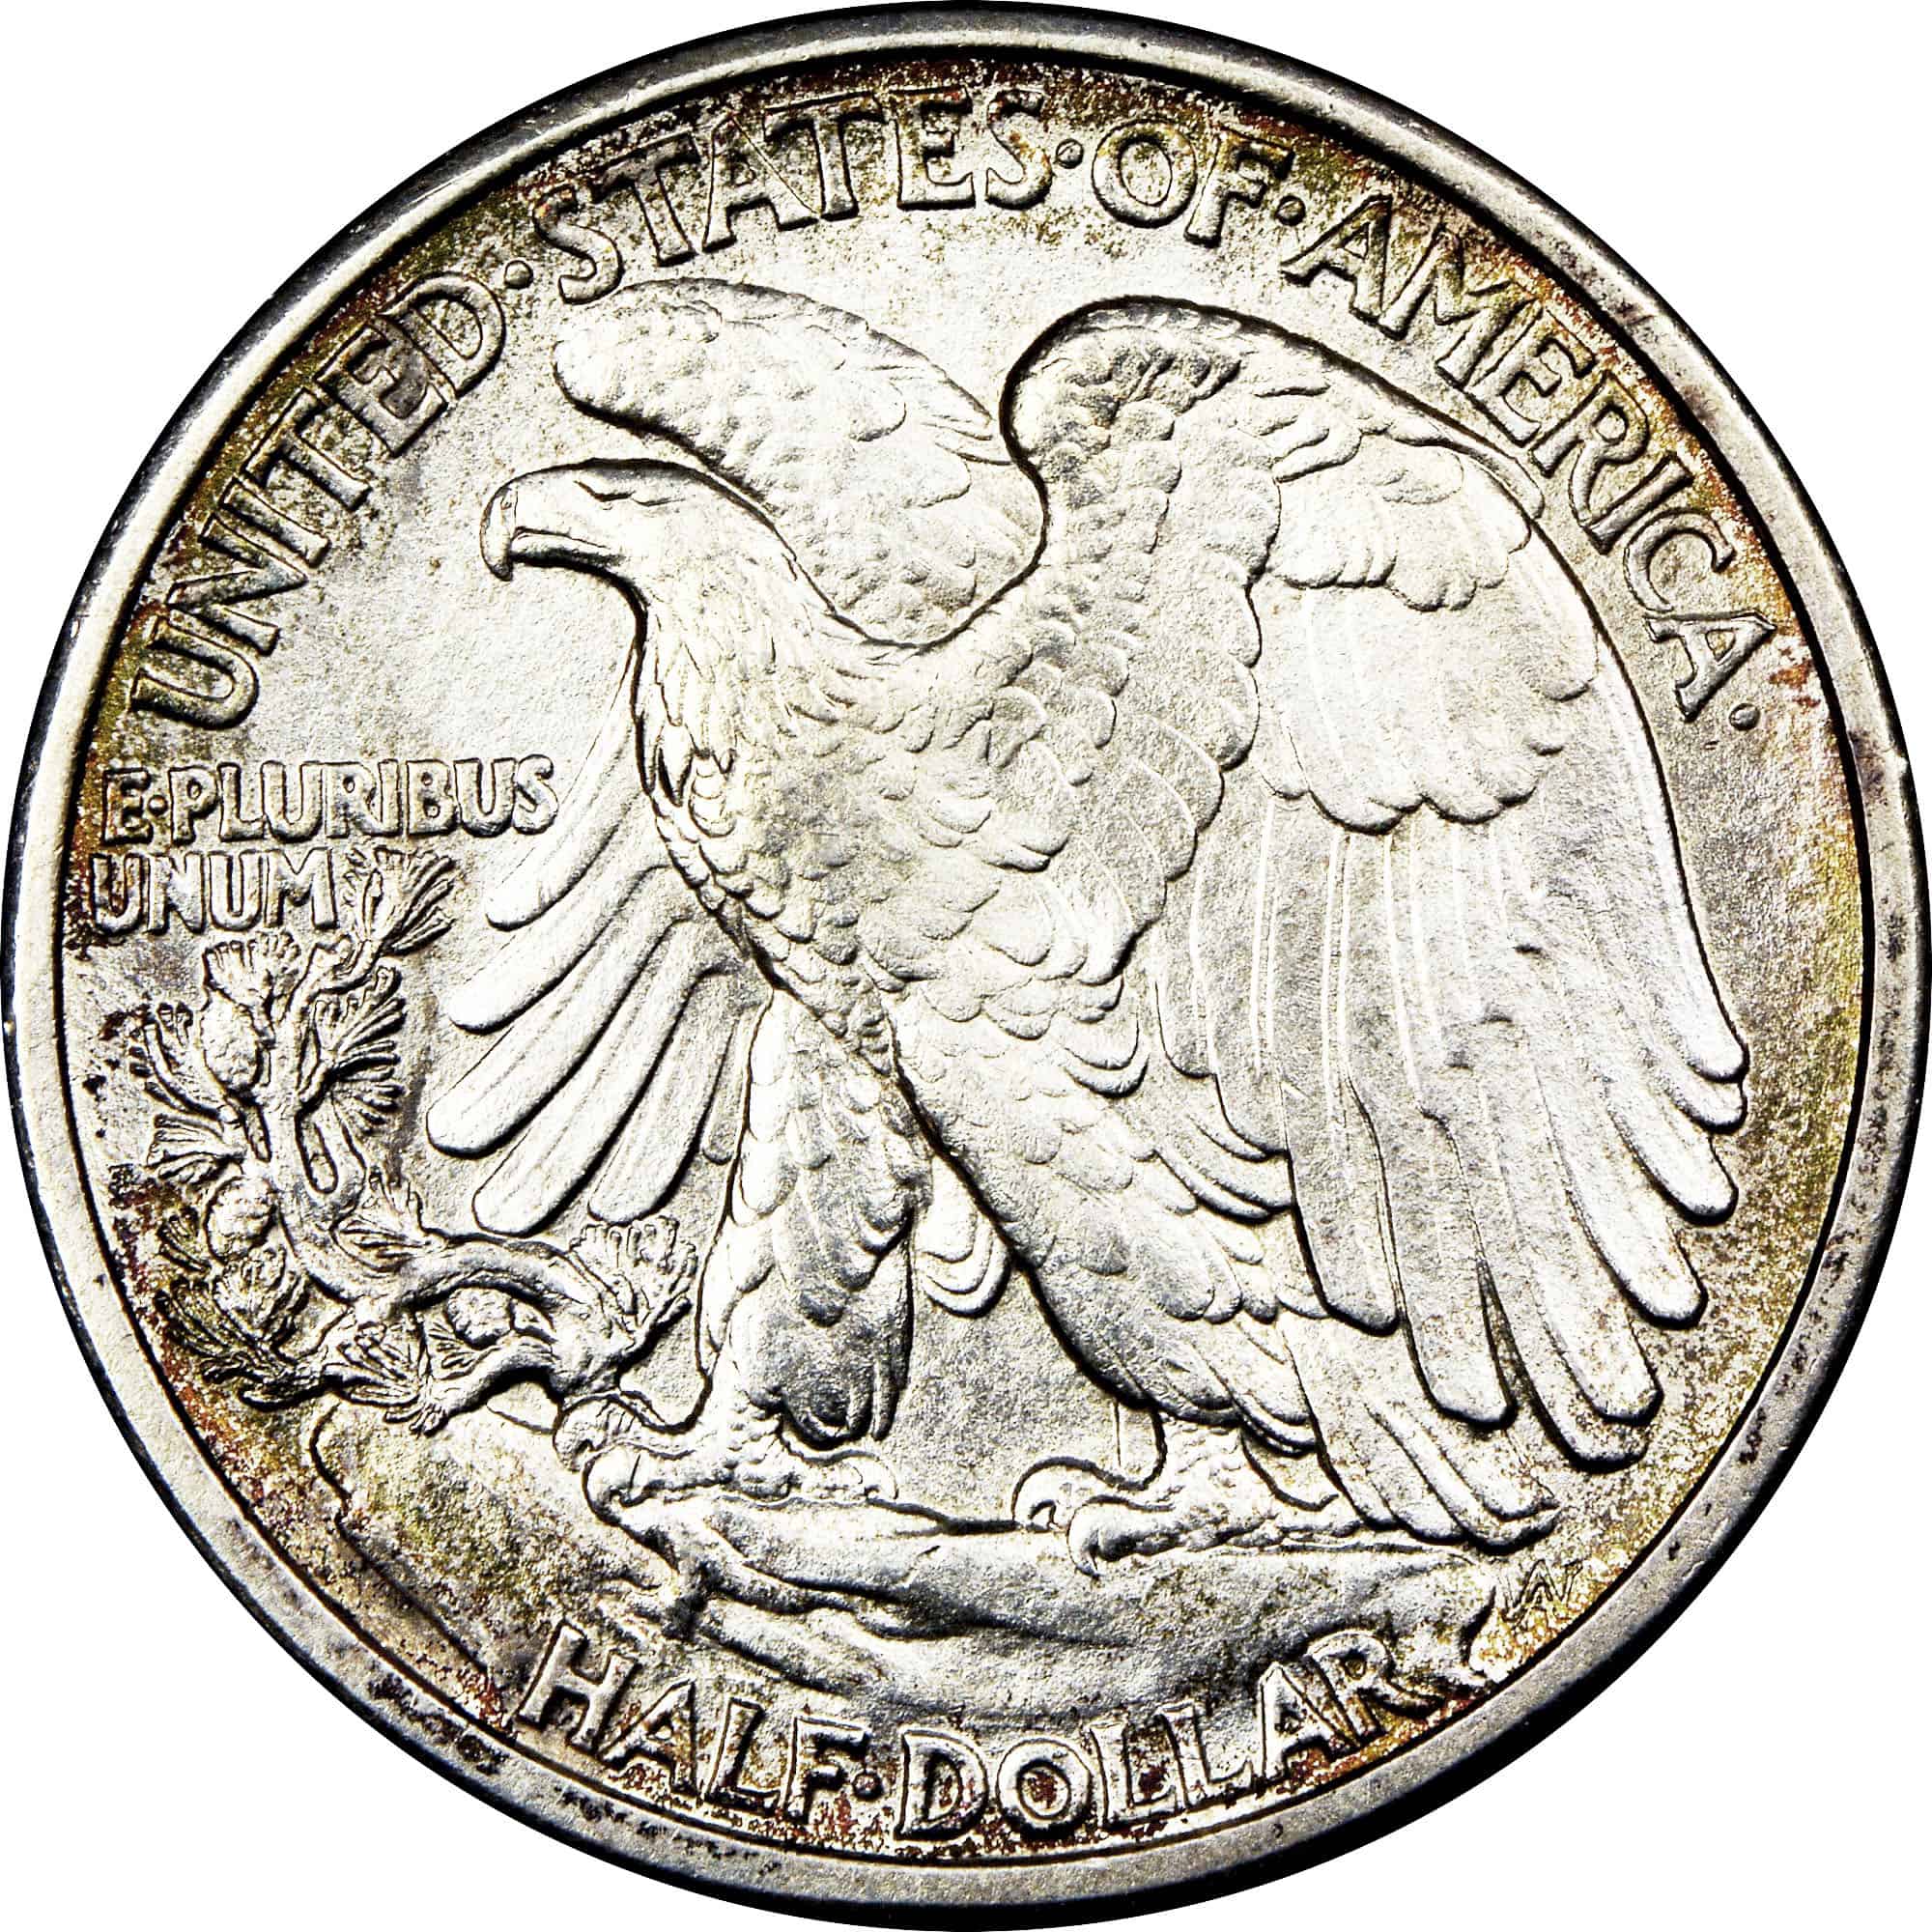 The reverse of the 1917 Walking Liberty half-dollar